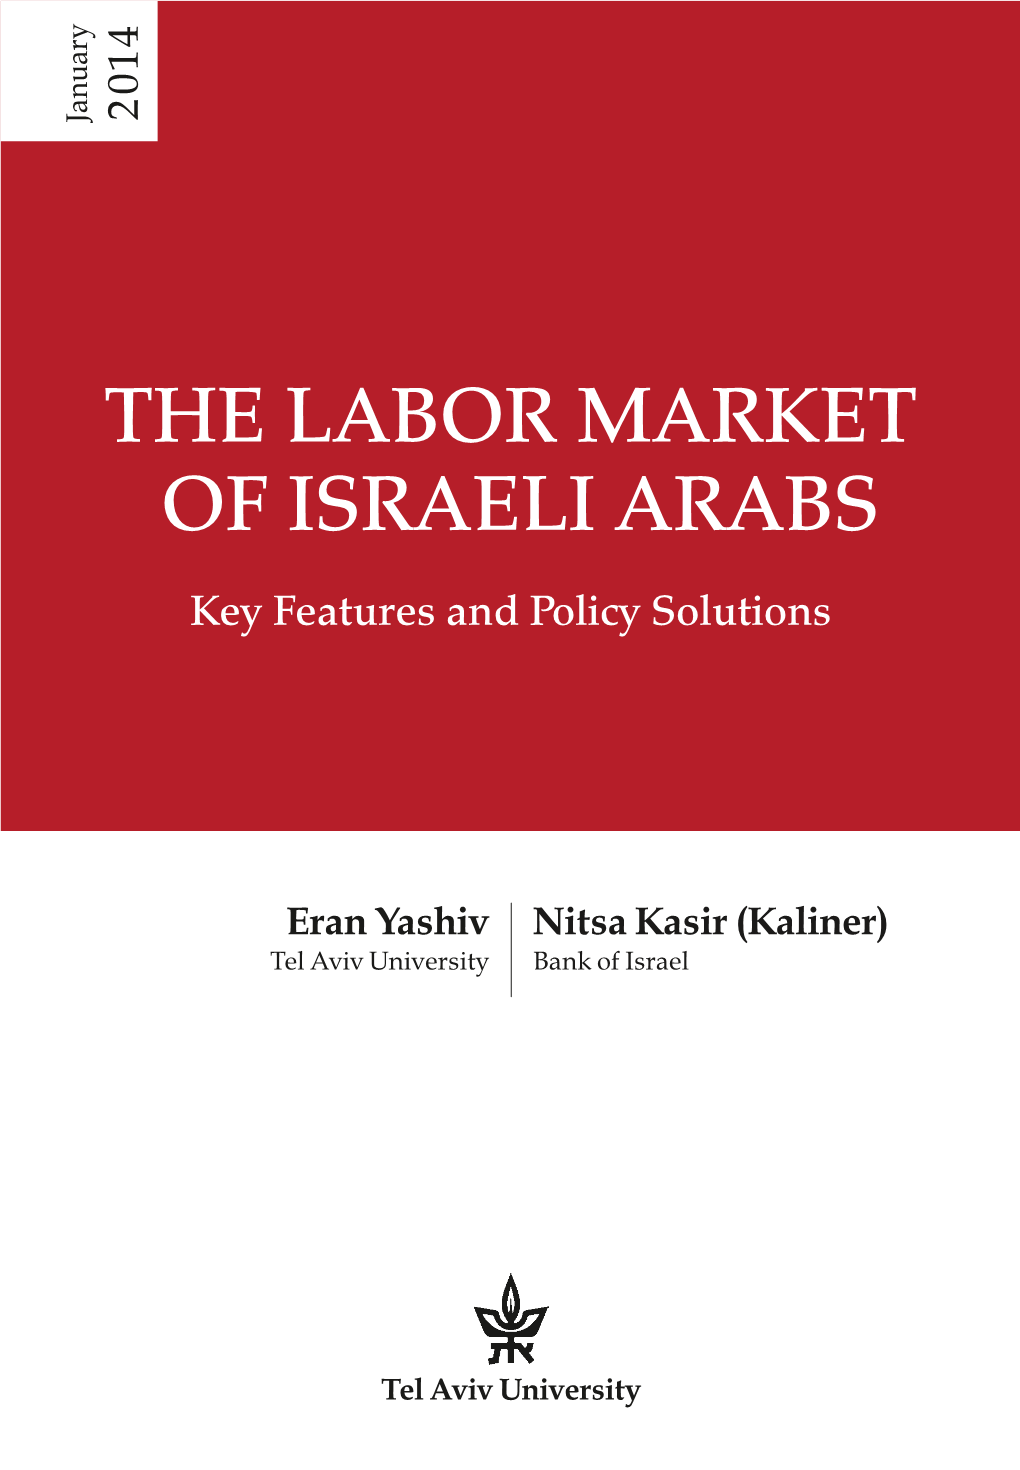 The Labor Market of Israeli Arabs